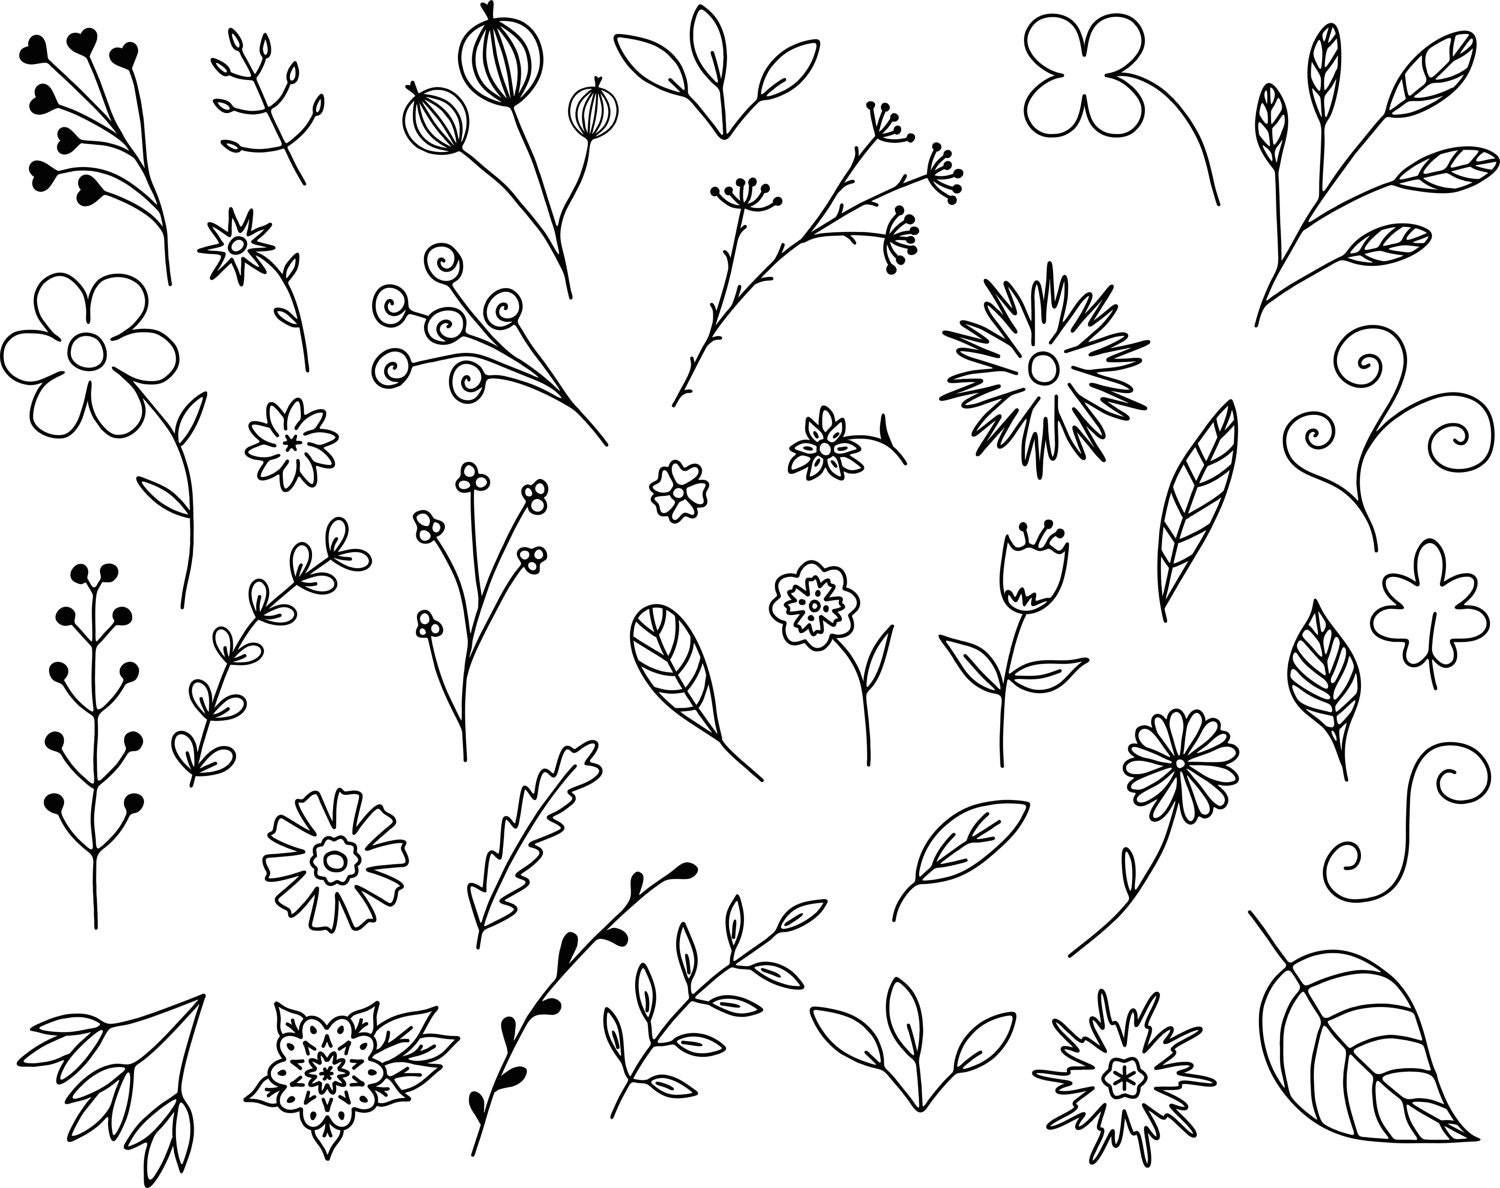 35 Floral Doodles Vector Pack Hand Drawn Doodle Clipart